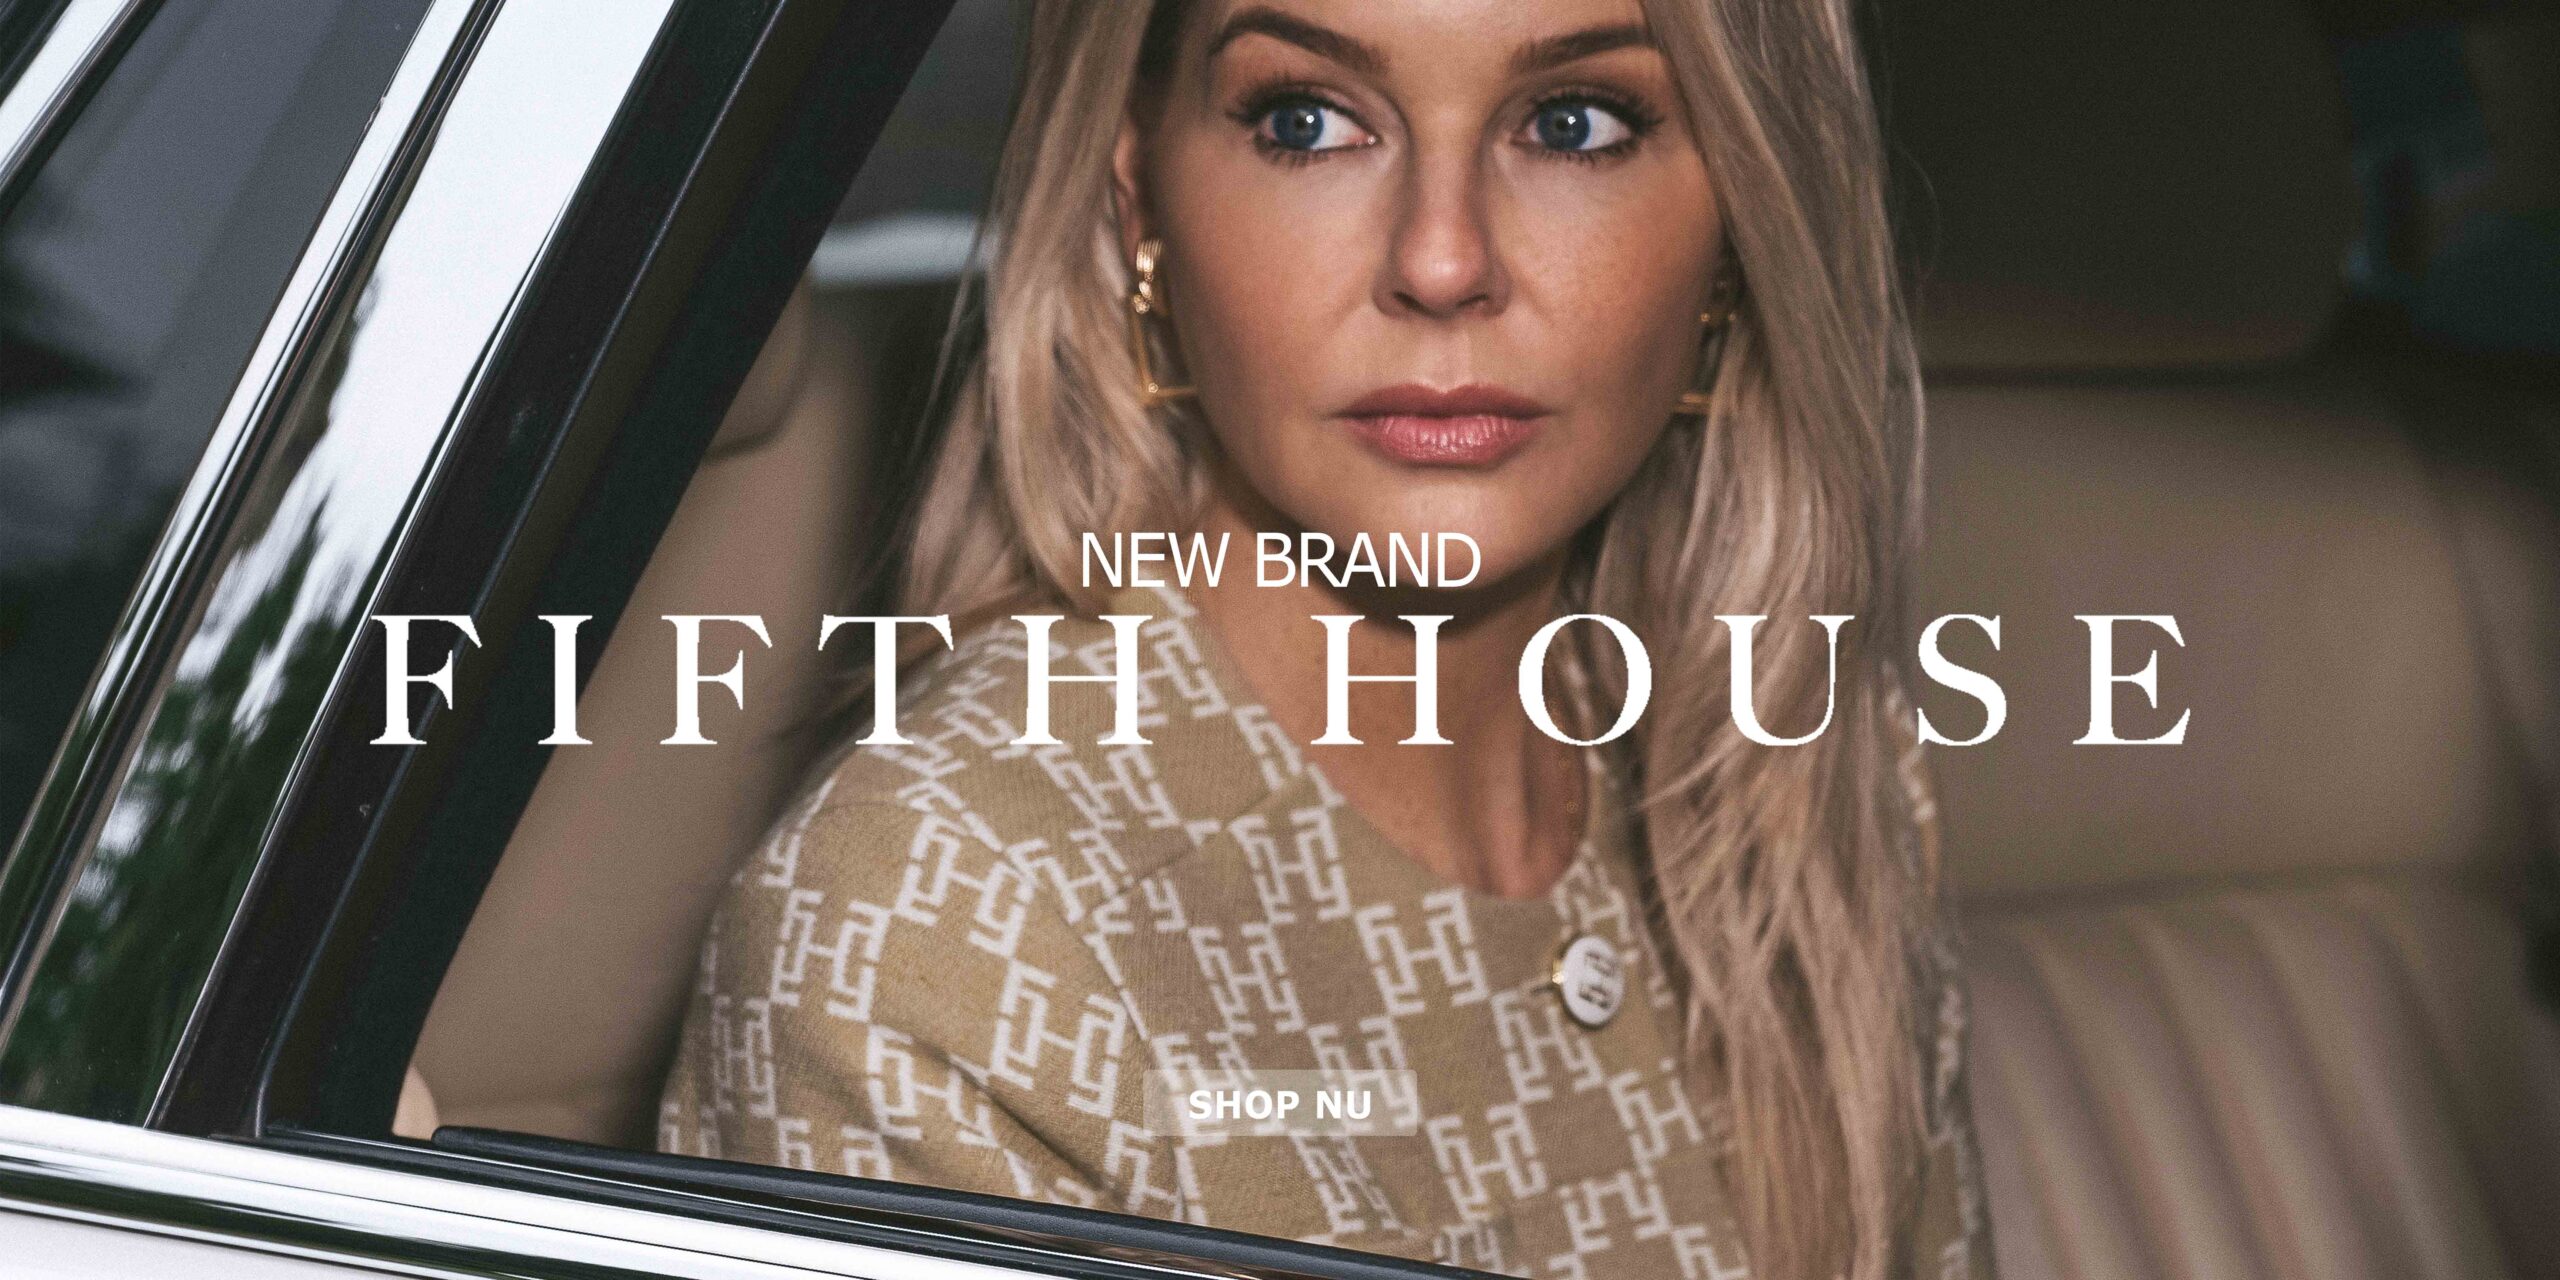 New brand bij Blush: Fifth House